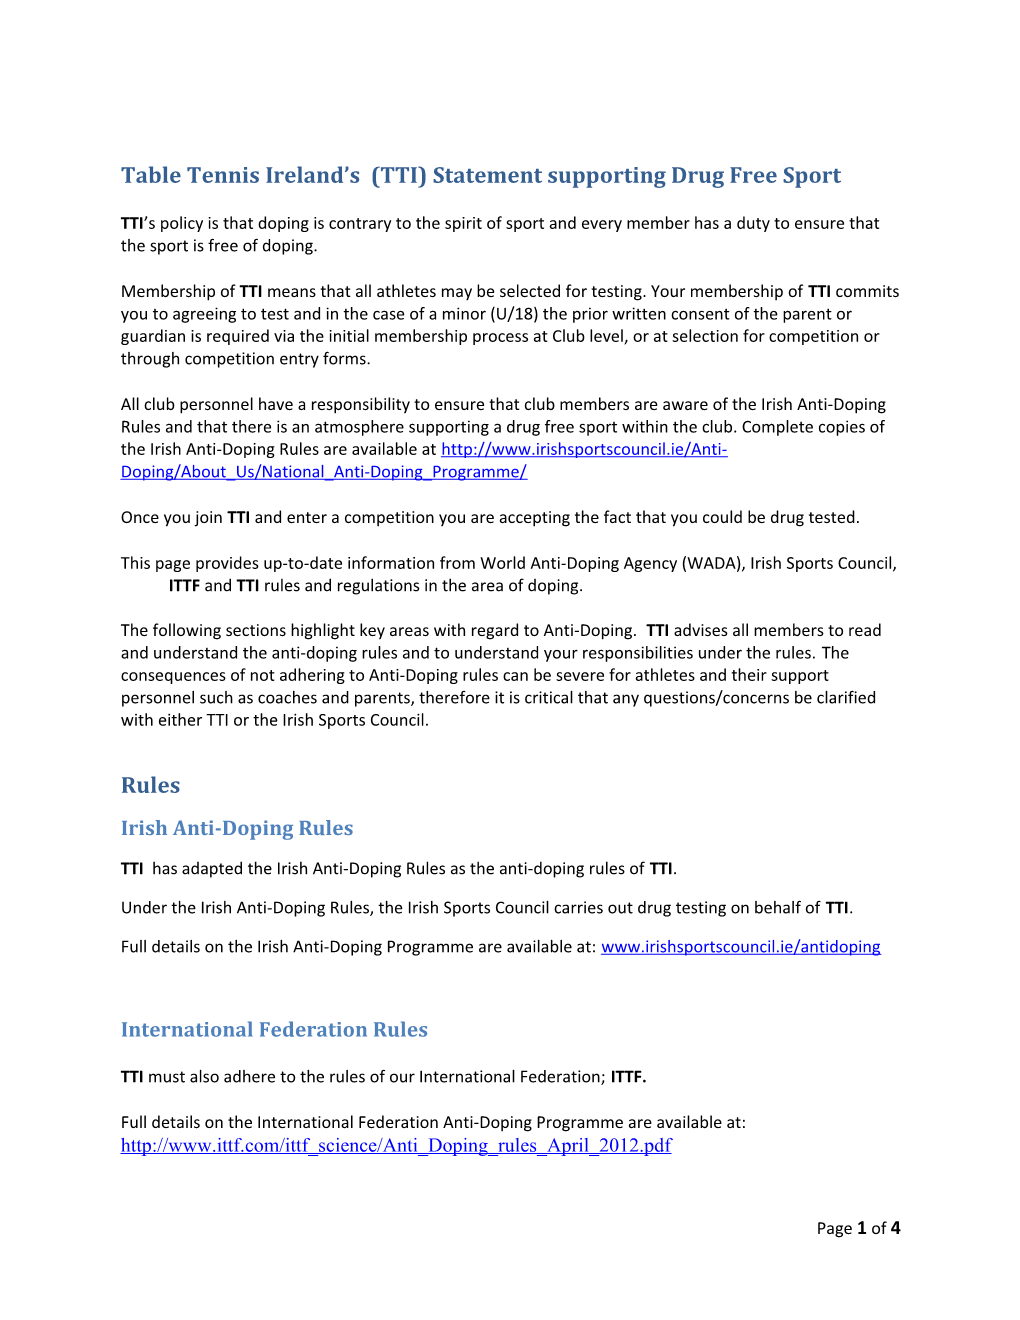 Table Tennis Ireland S (TTI) Statement Supporting Drug Free Sport